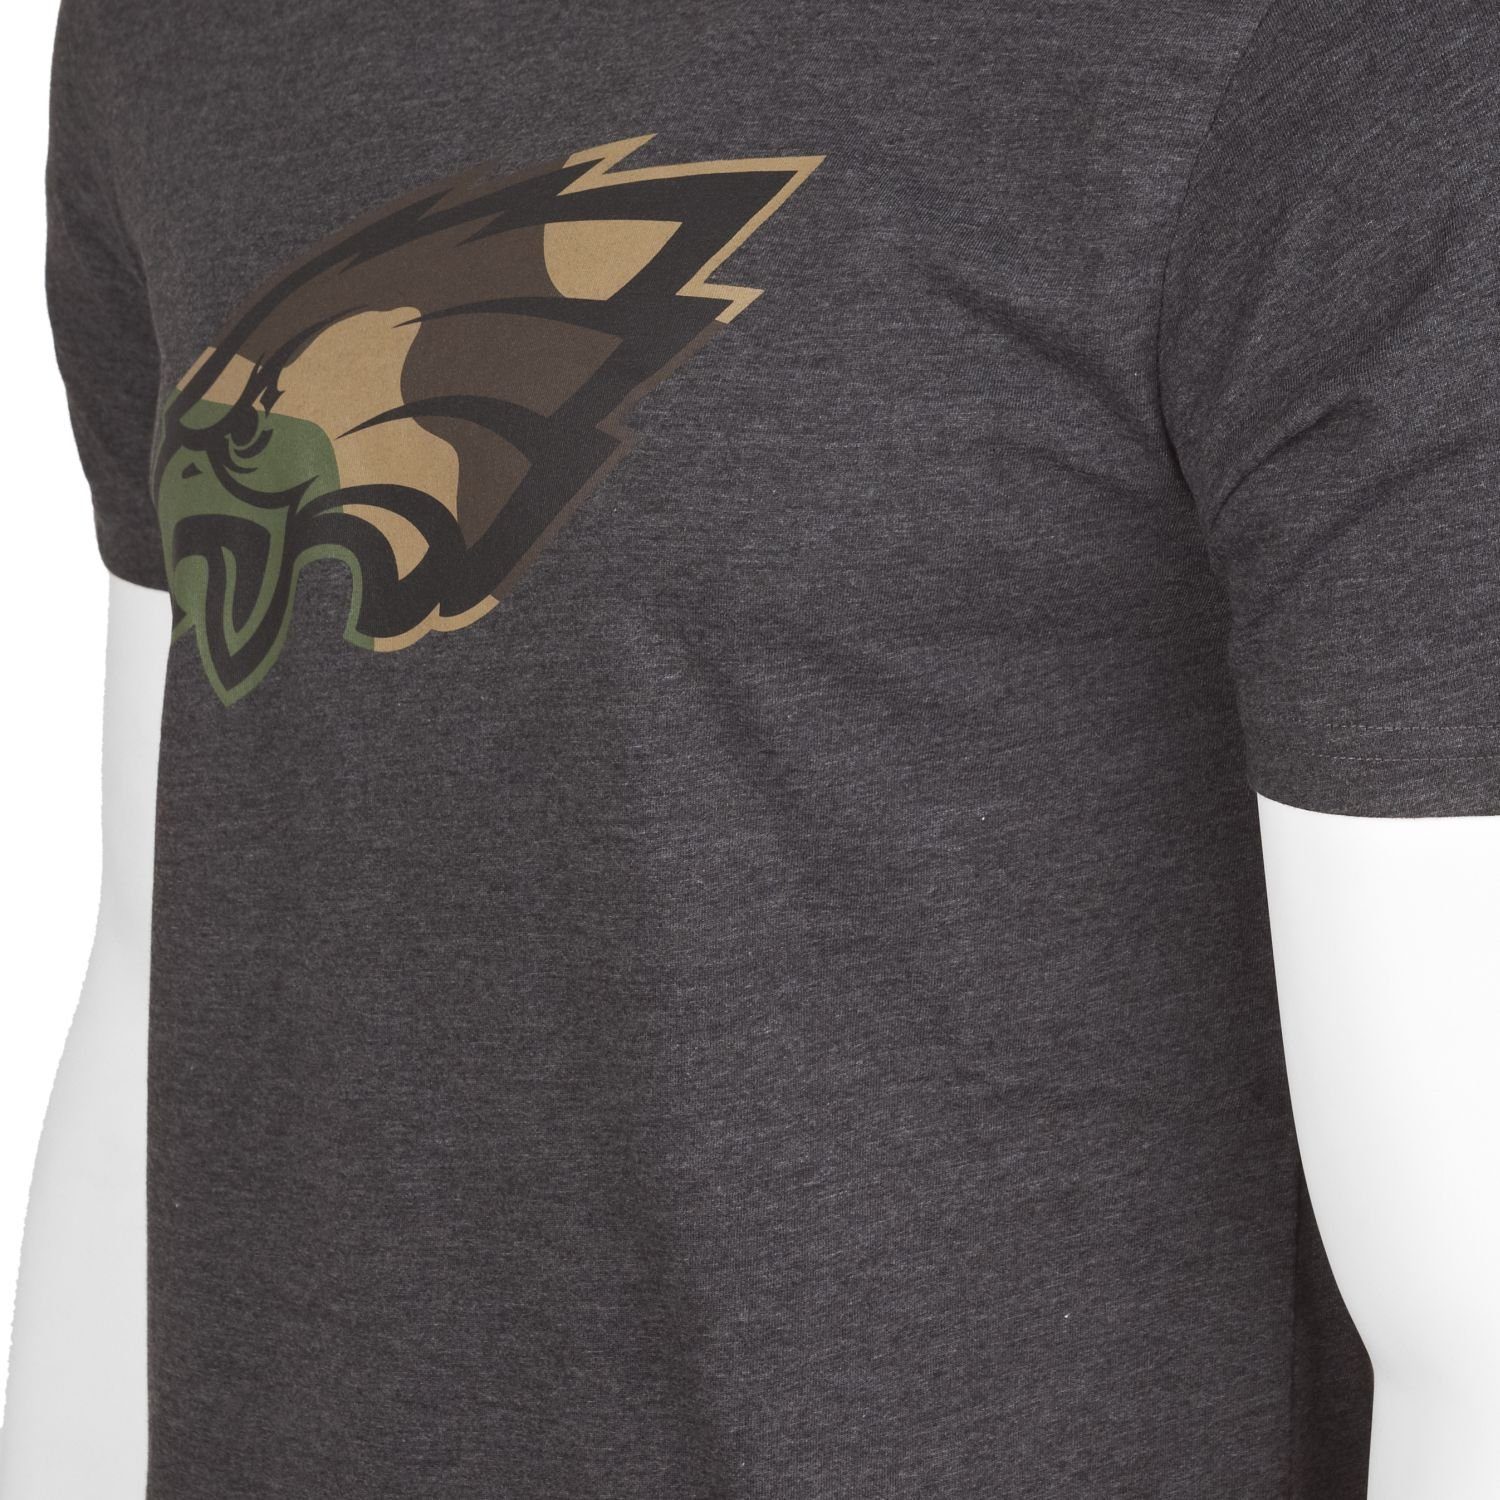 Print-Shirt Era charcoal Logo Team Eagles Philadelphia NFL New